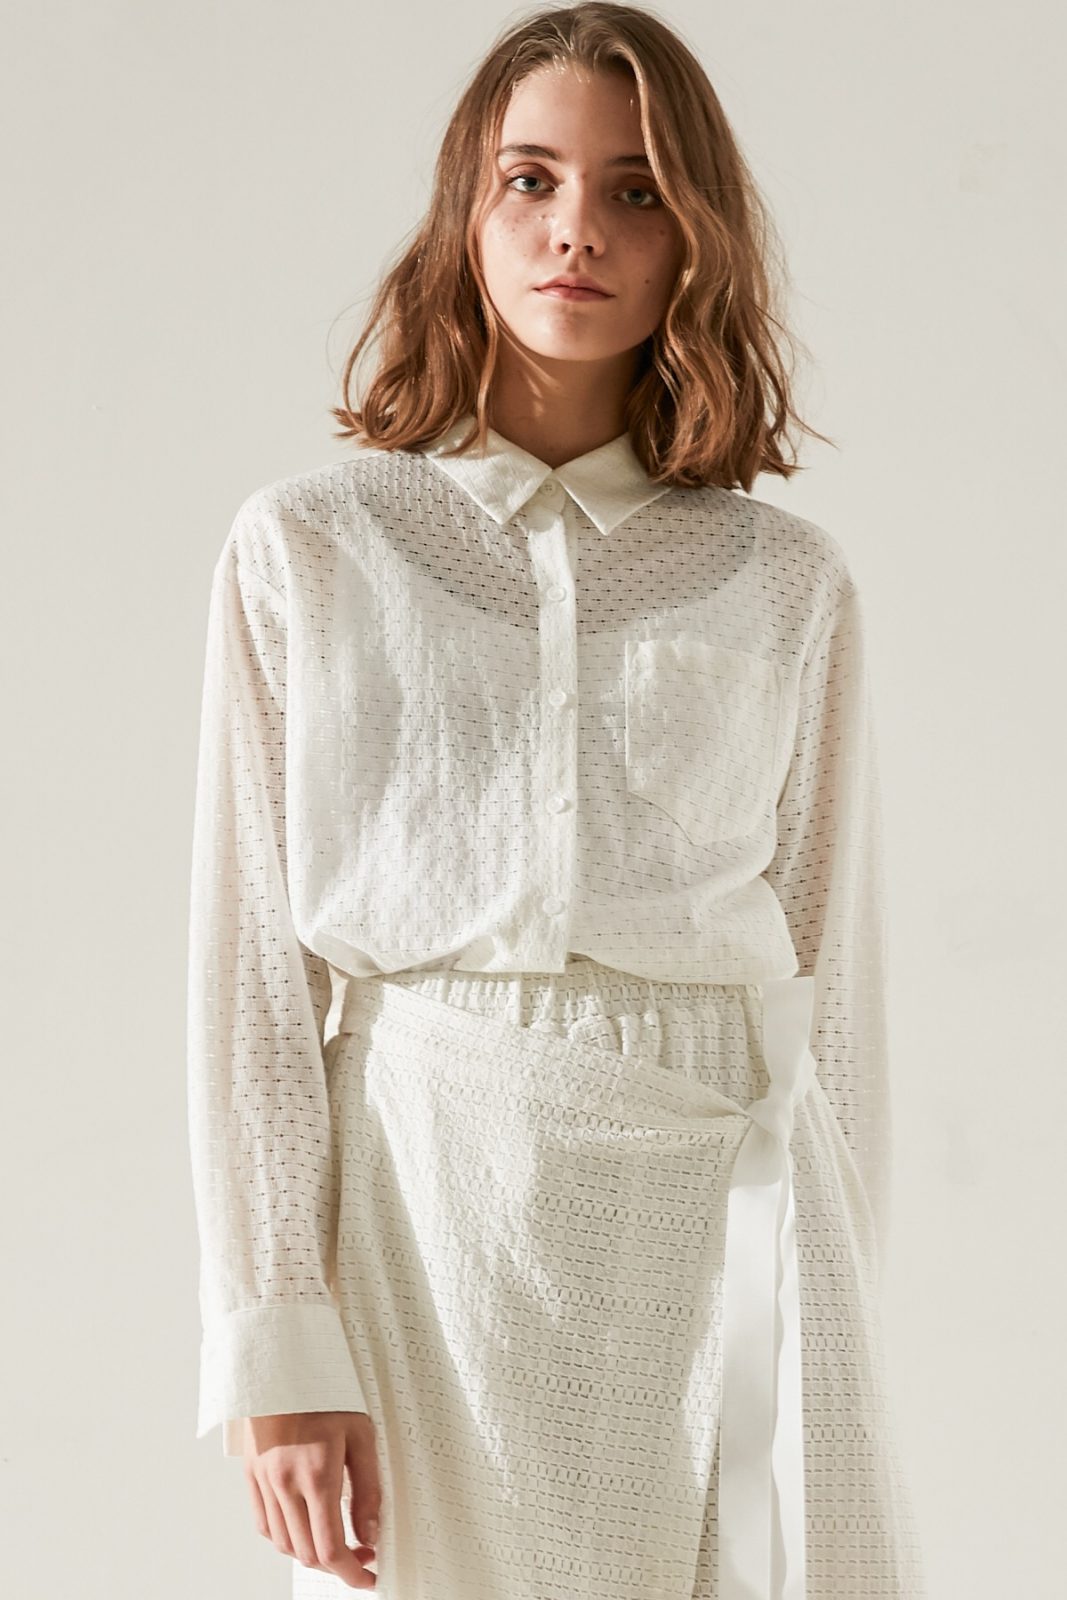 SKYE minimalist women clothing fashion Victoriana Shirt lace white 3